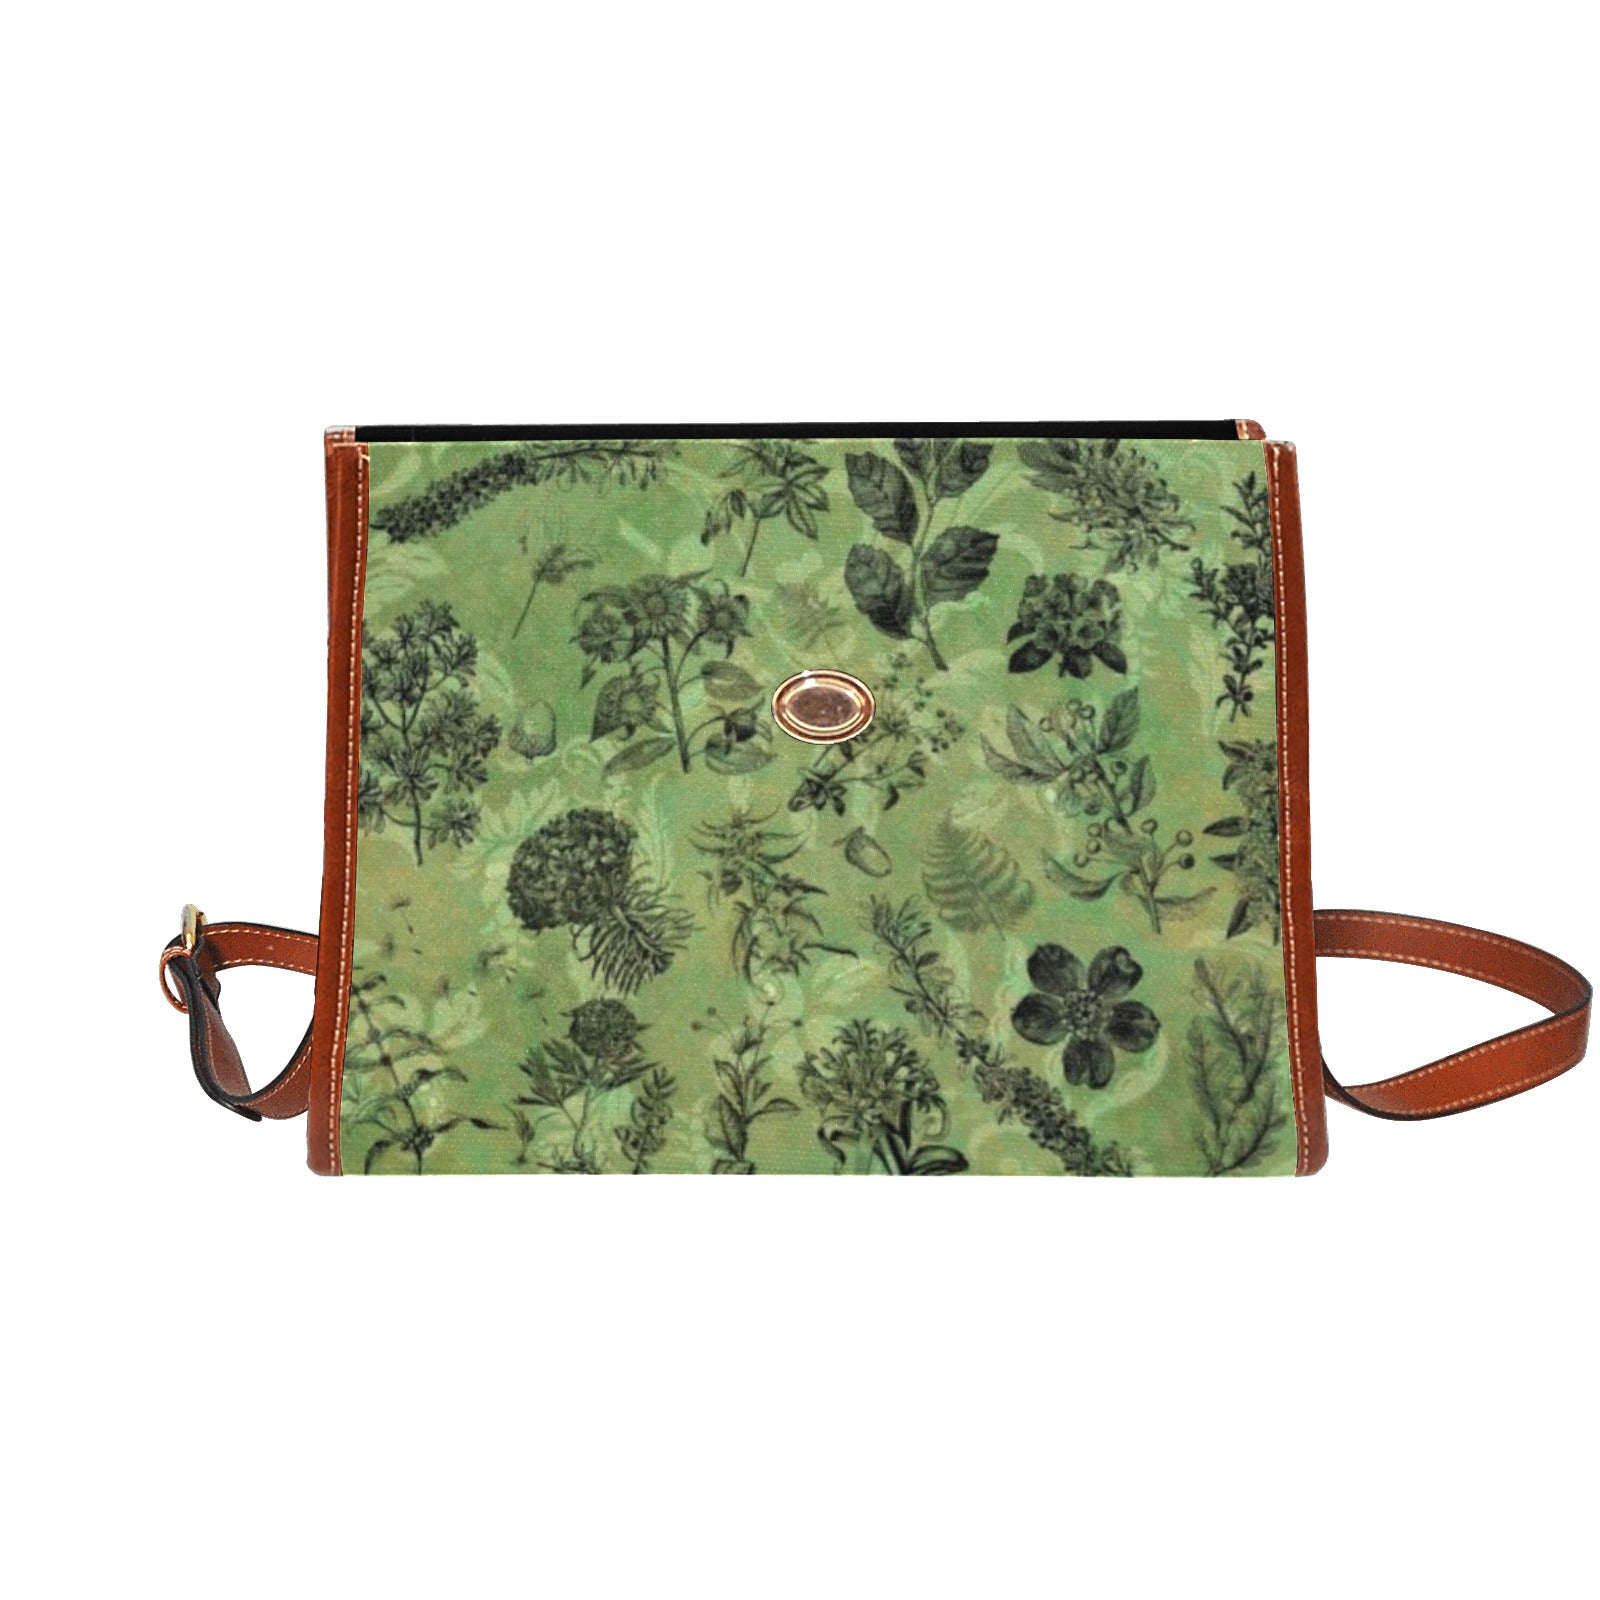 Vintage Botanical - Waterproof Canvas Handbag